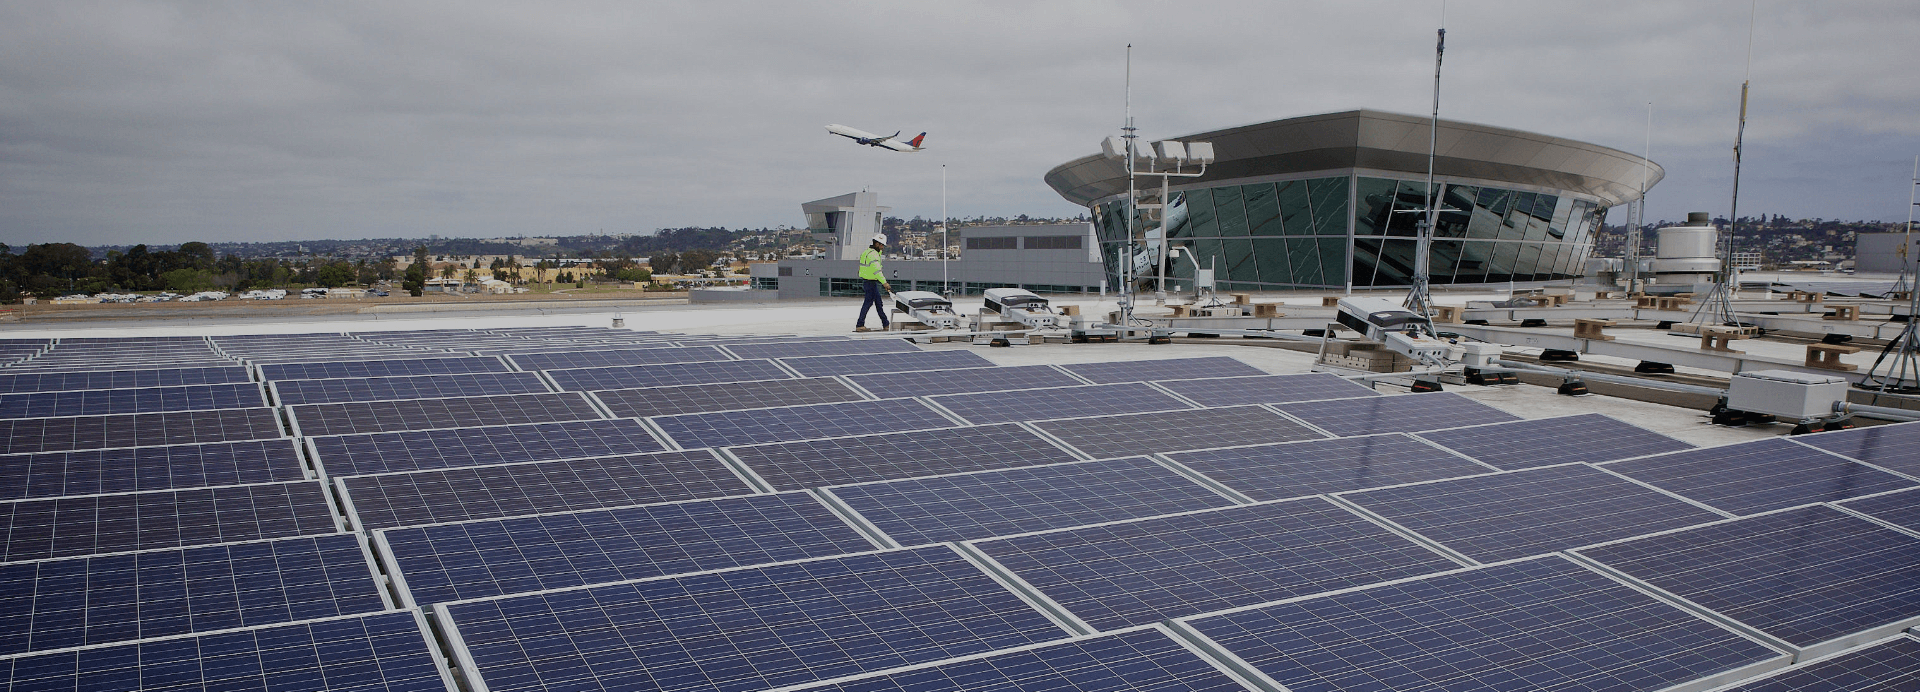 San diego airport solar